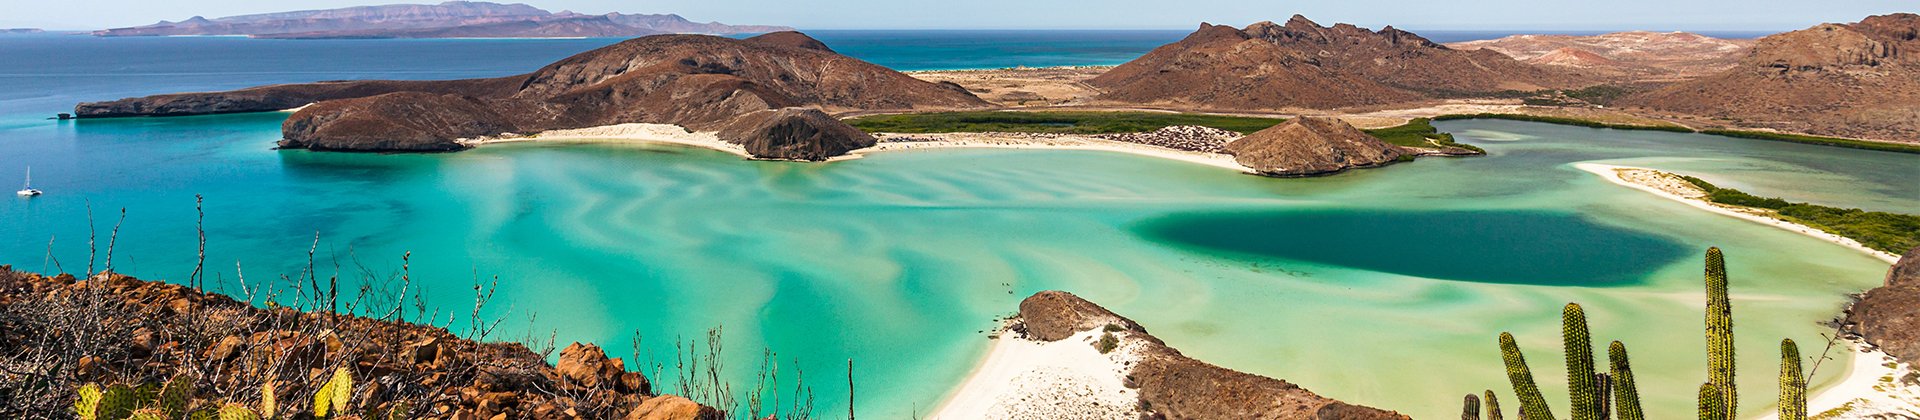 Stunning bay in Baja California